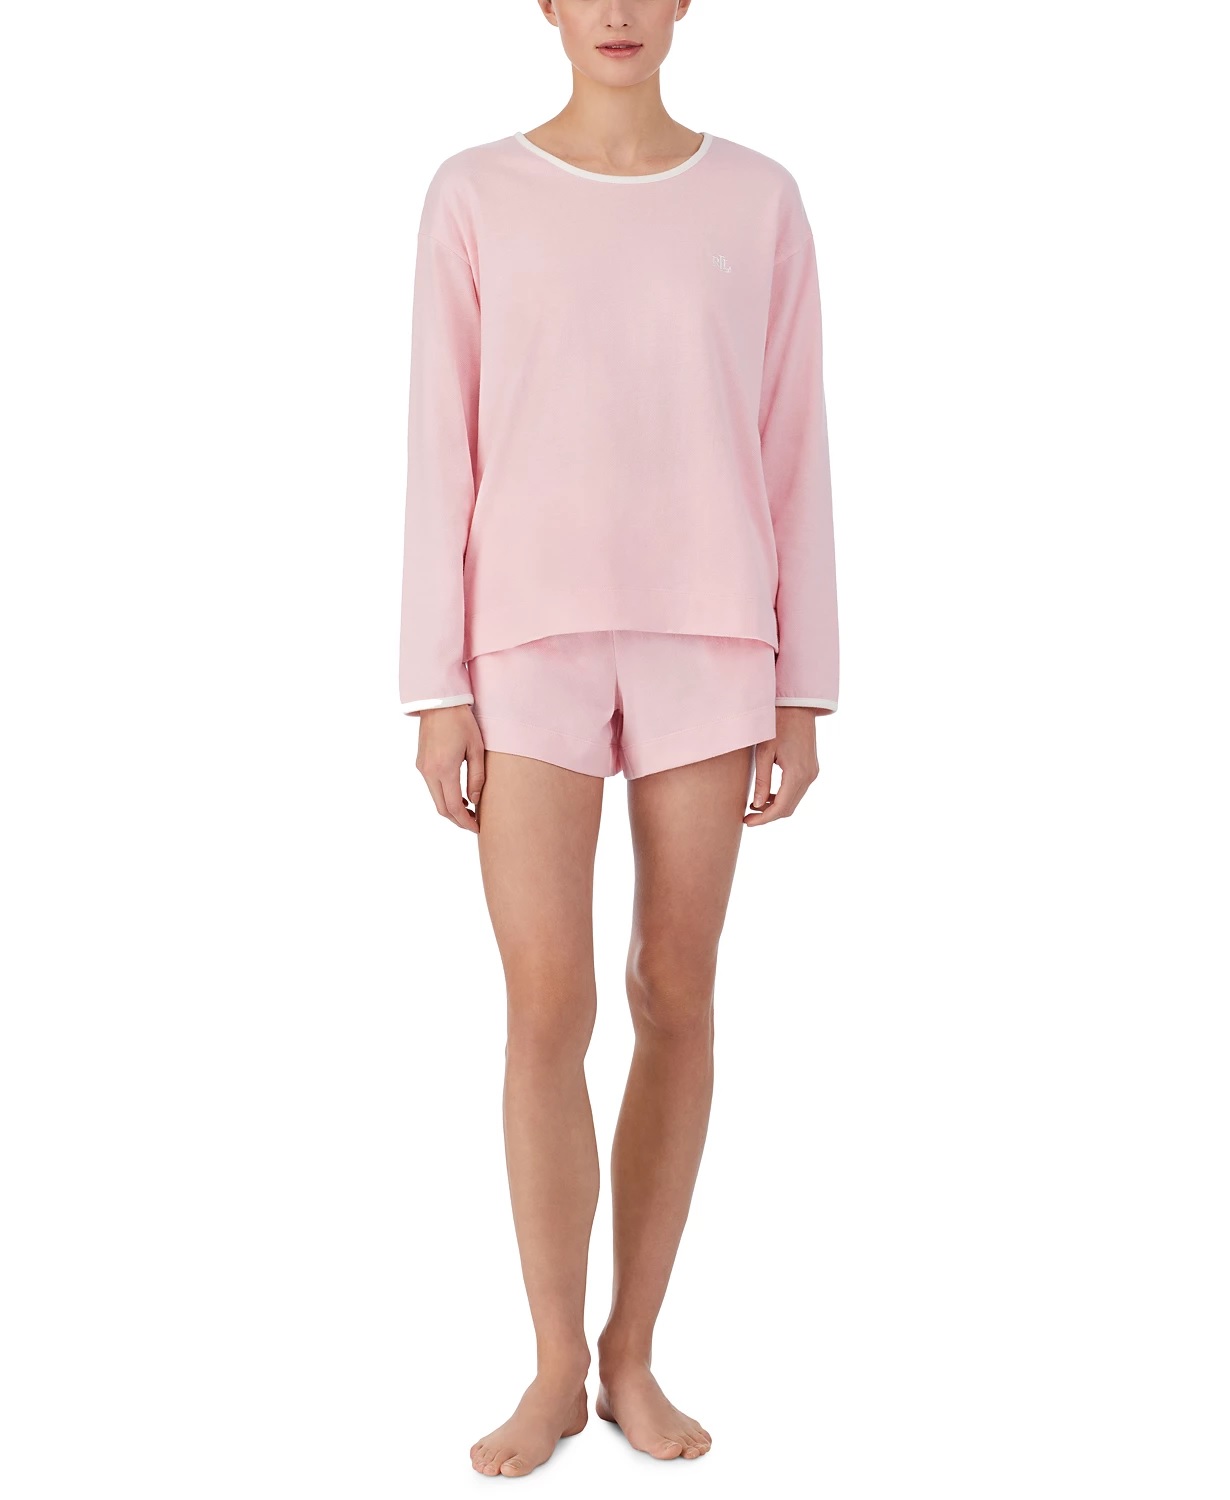 Lauren Ralph Knit Twill Shorts Pajamas Set $24.93 +Free S&H on $25+